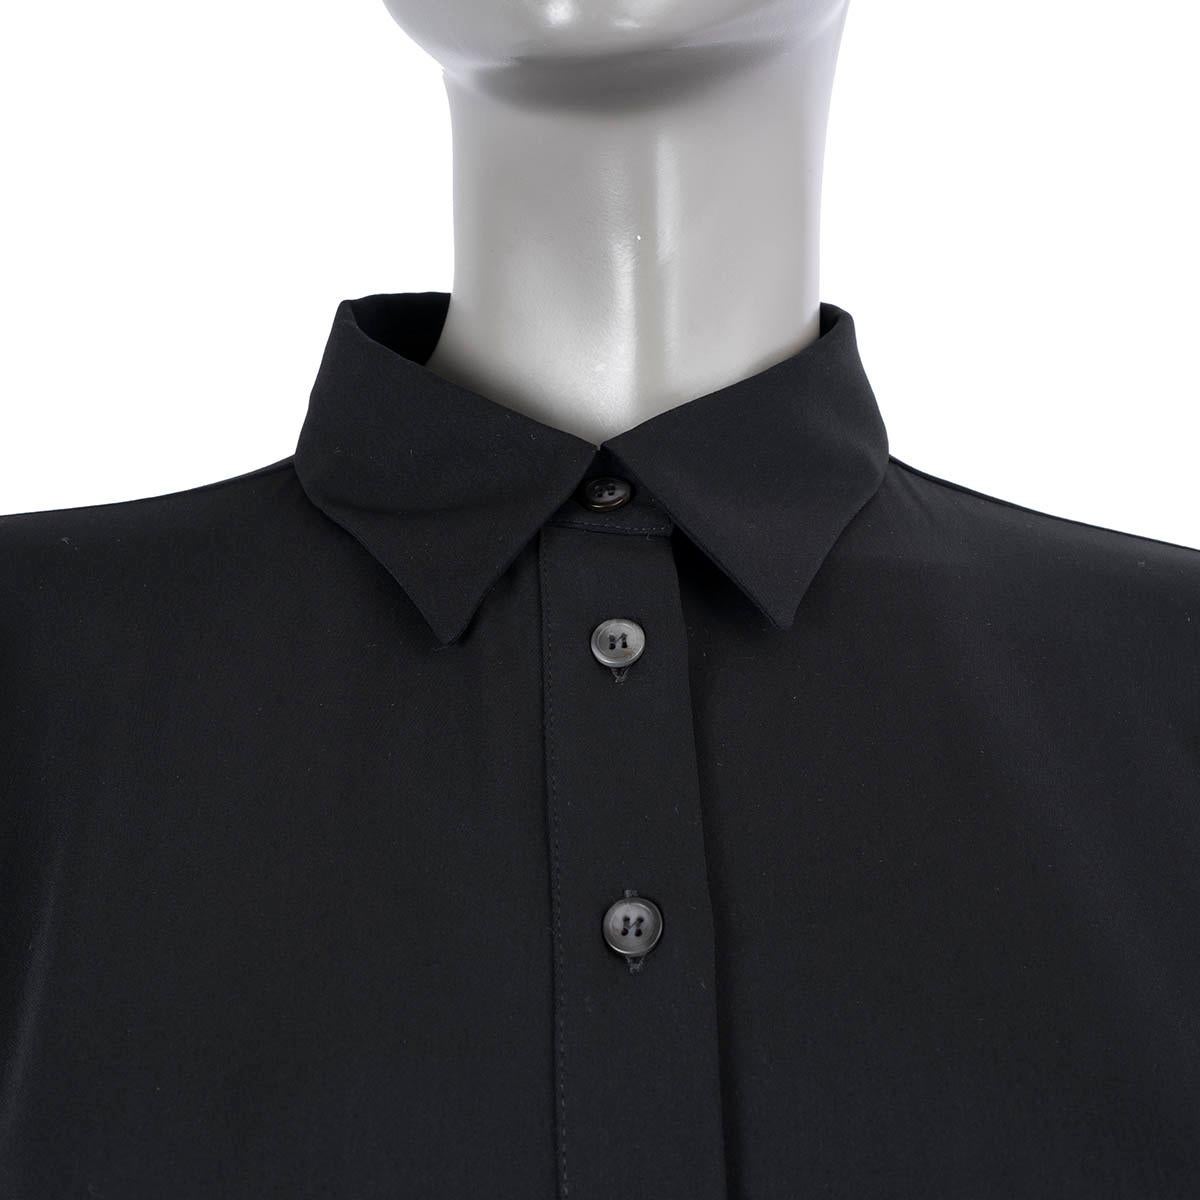 MM6 MARTIN MARGIELA black polyester SHORT SLEEVE SHIRT Dress 46 XL For Sale 1